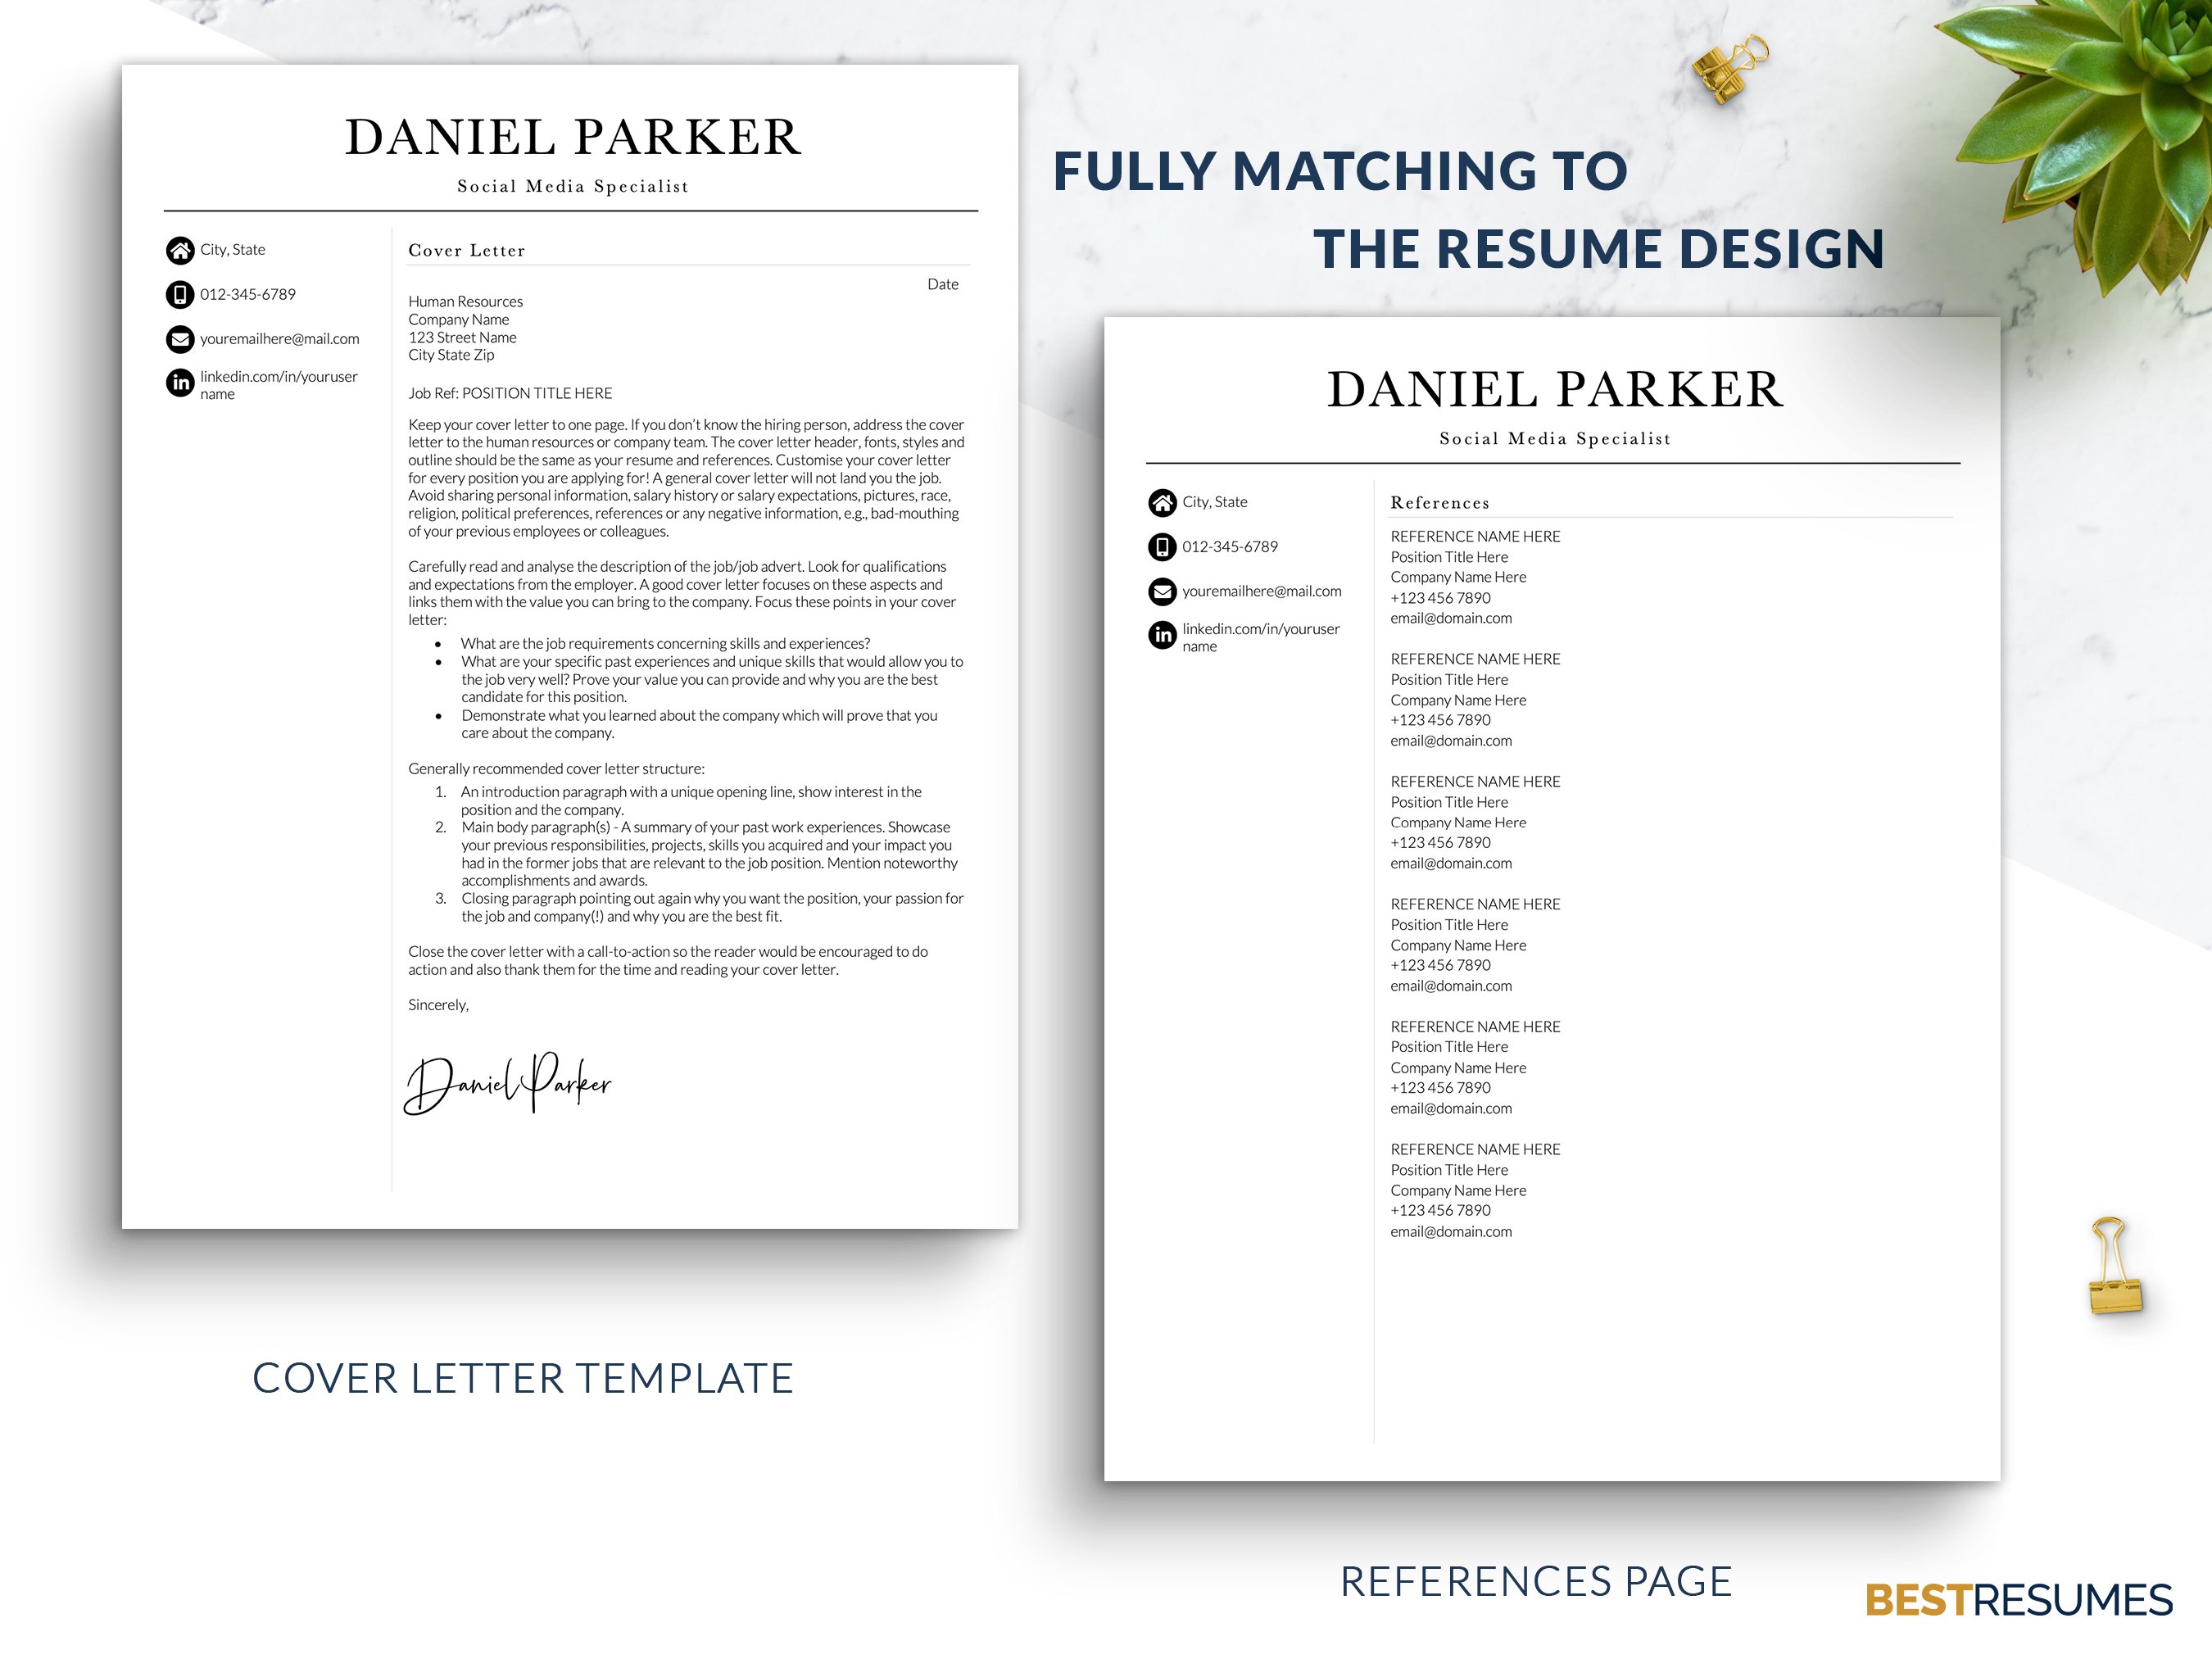 social media marketing resume template cover letter references daniel parker 934